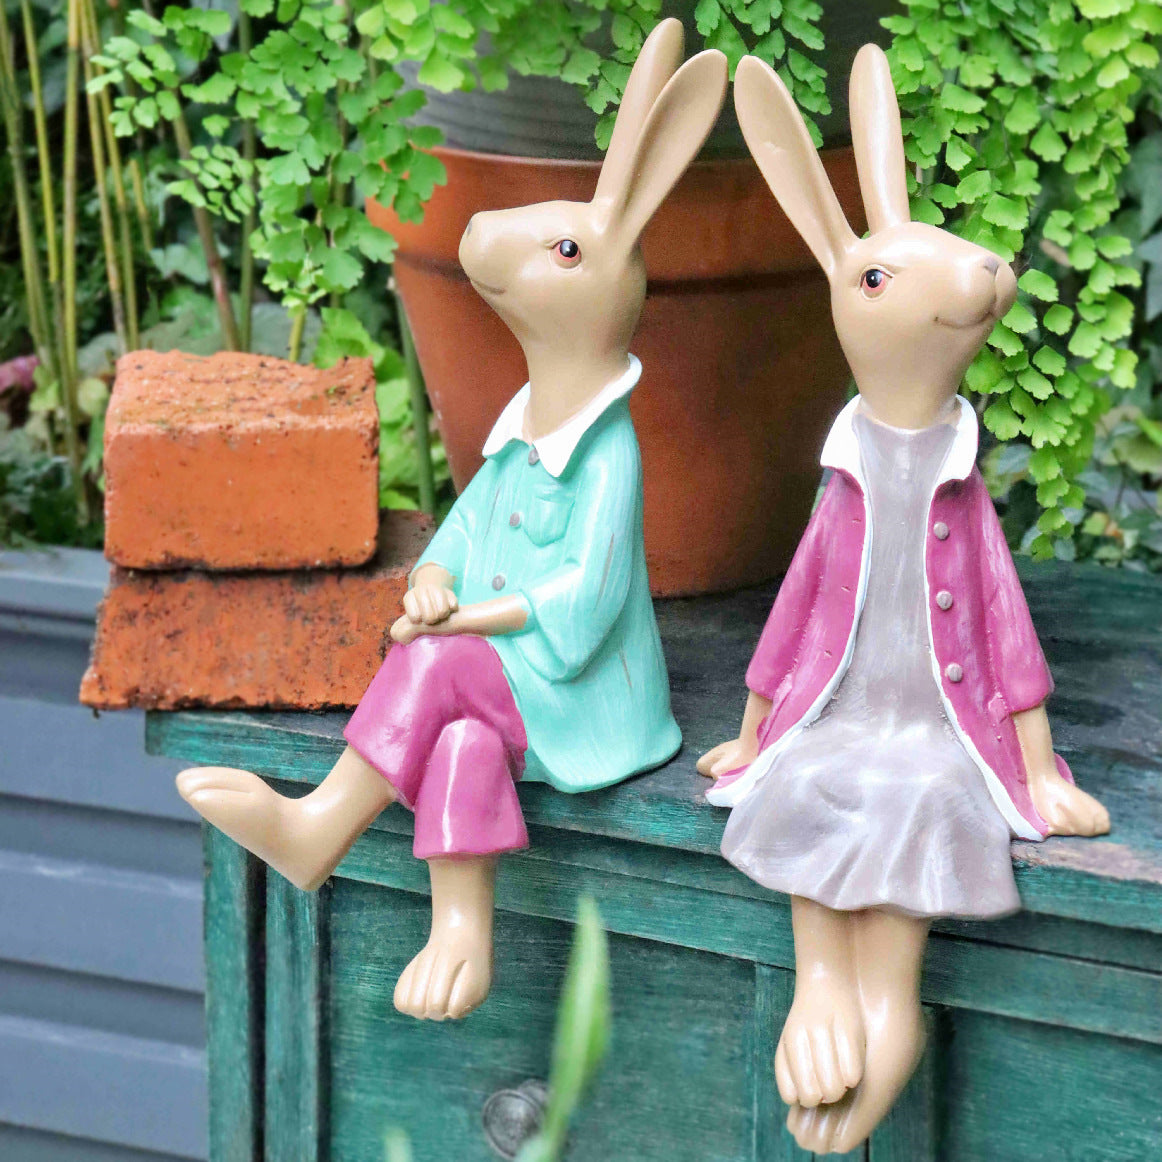 Sitting Rabbit Lovers Statue for Garden, Beautiful Garden Courtyard Ornaments, Villa Outdoor Decor Gardening Ideas, Unique Modern Garden Sculptures